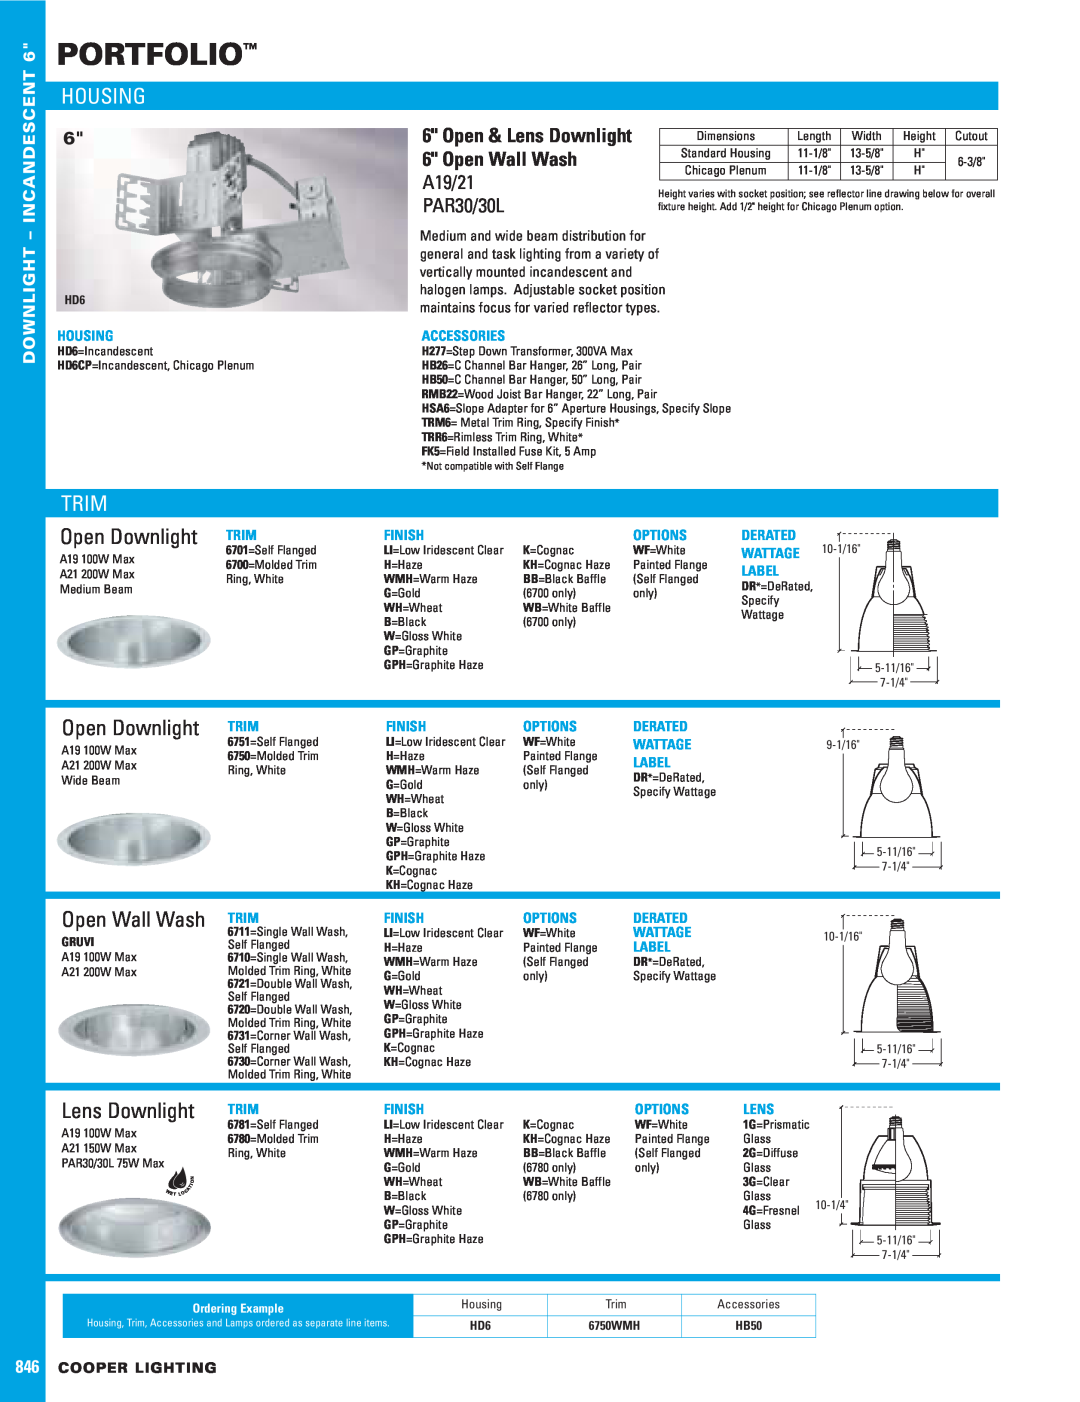 Cooper Lighting dimensions Portfolio, Housing, Trim, A19/21, PAR30/30L, Open & Lens Downlight, 846COOPER LIGHTING 